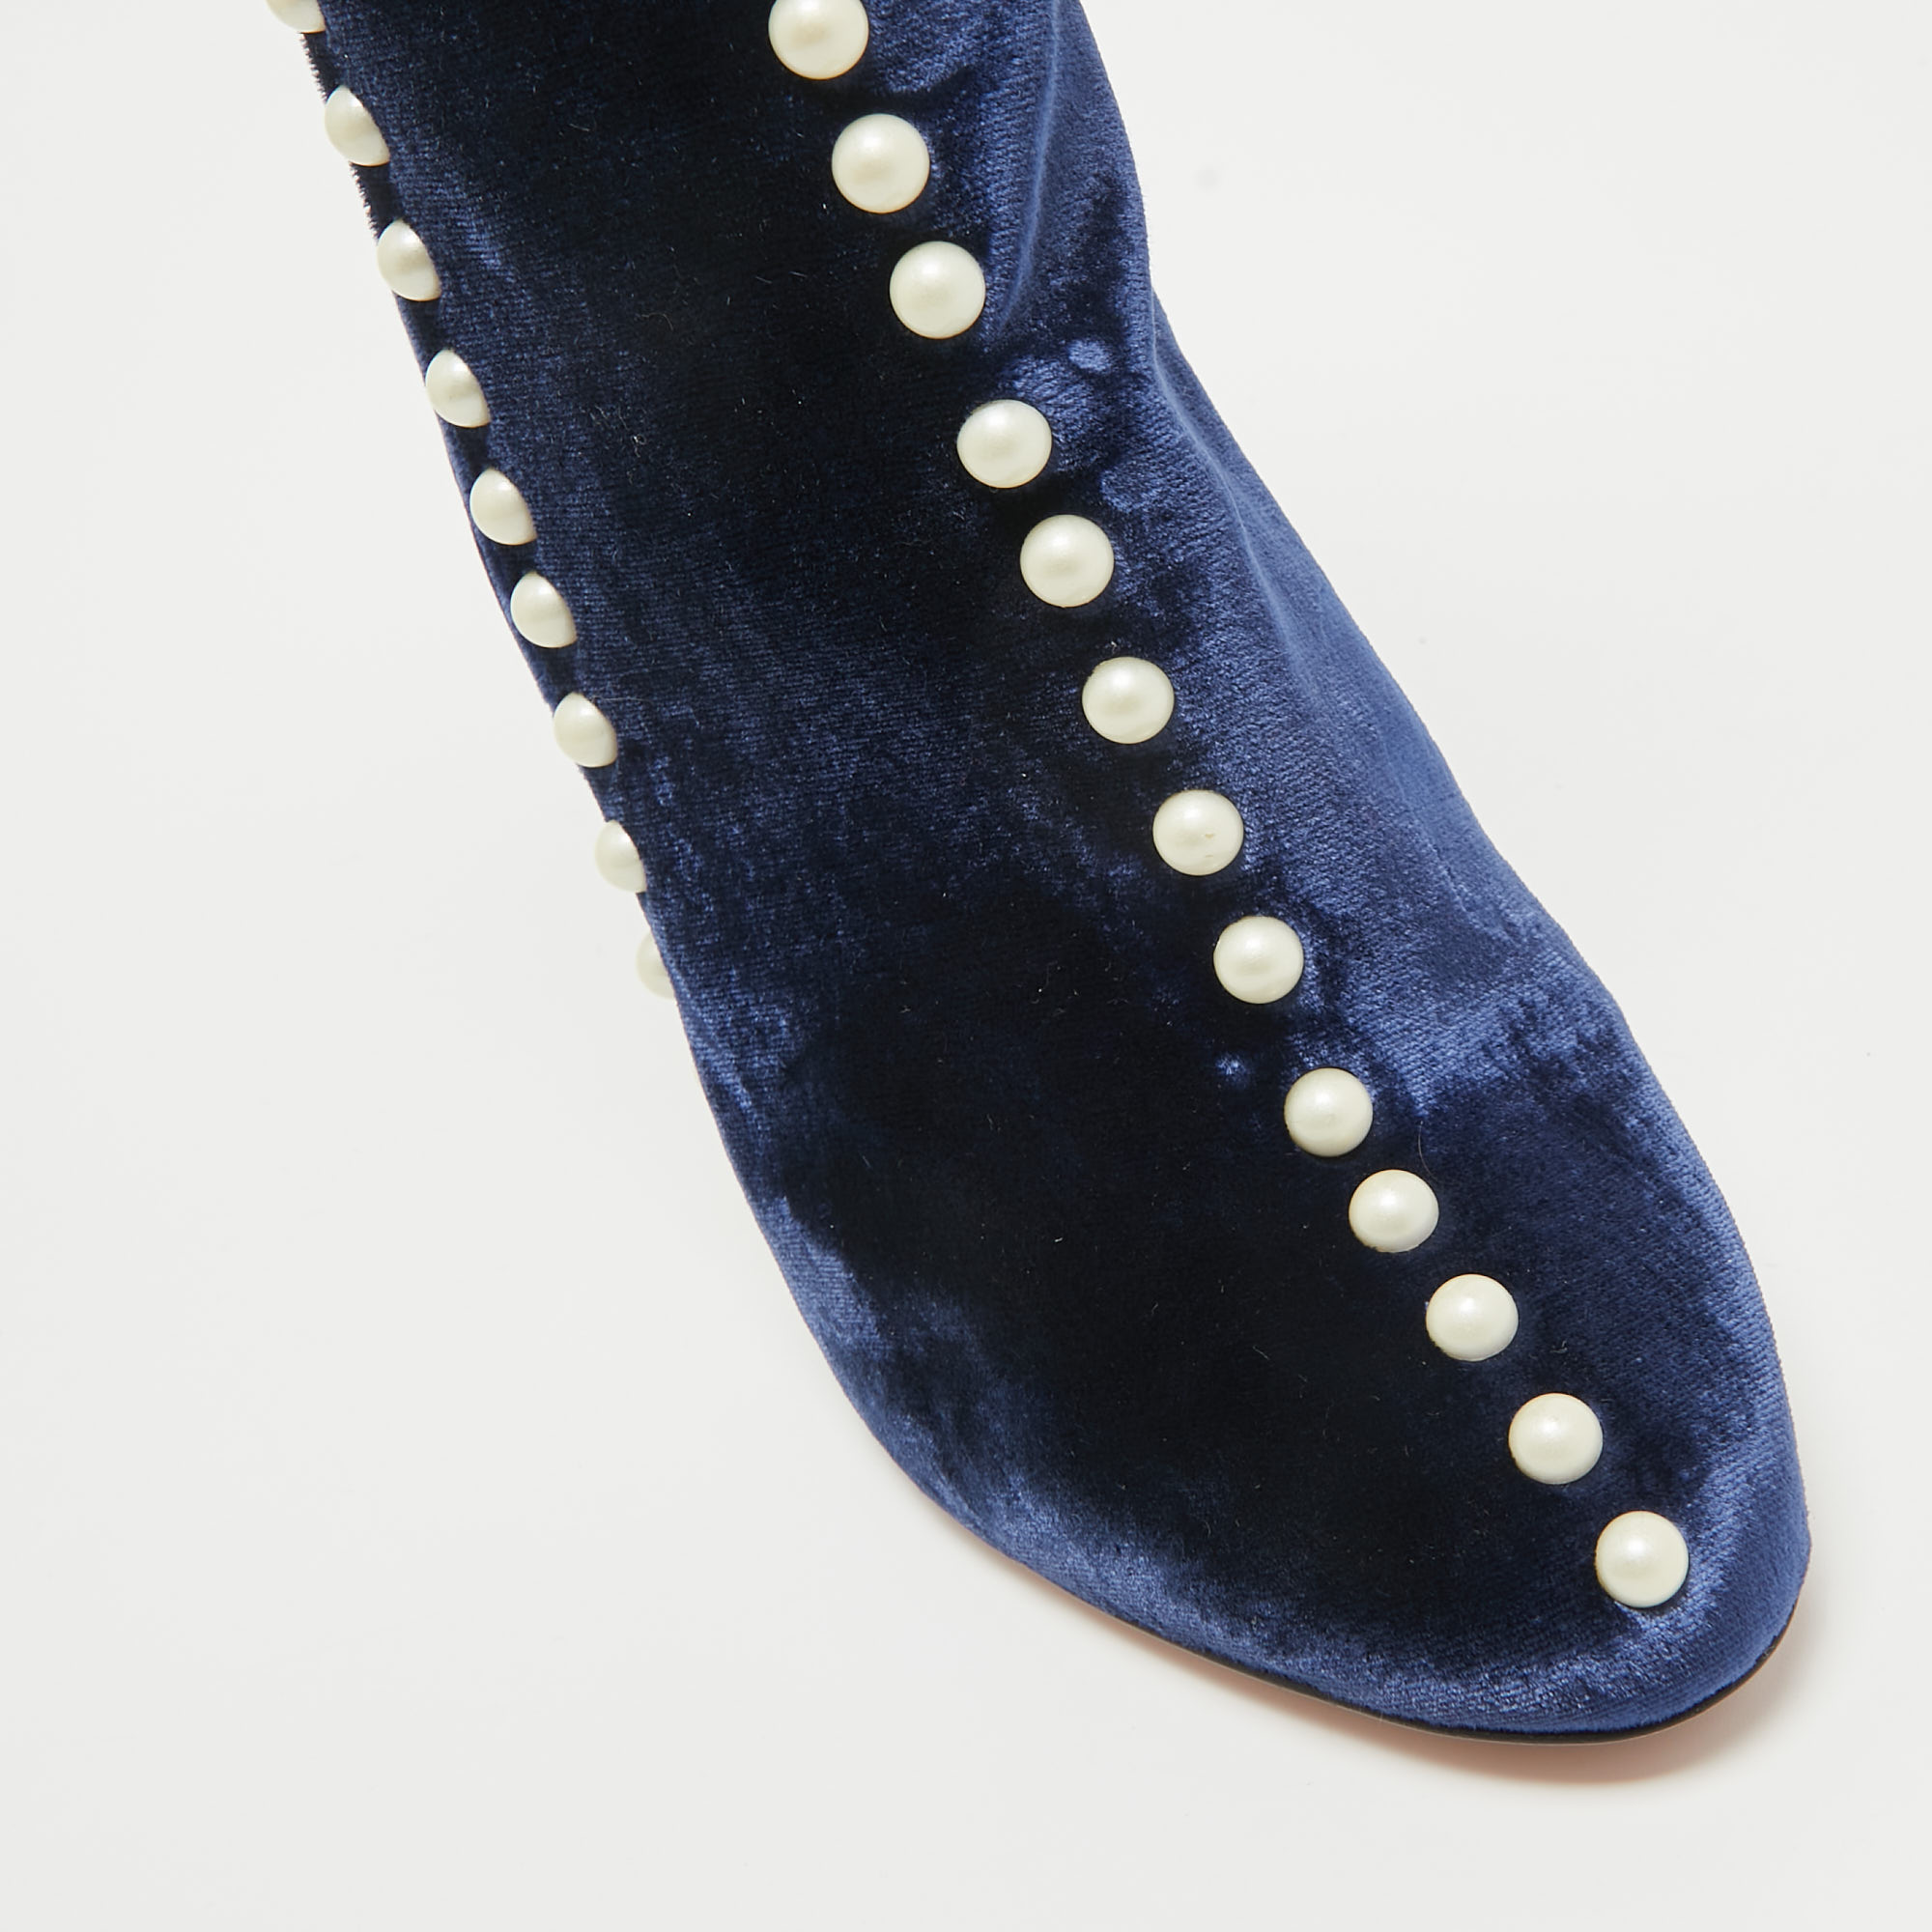 Aquazzura Blue Velvet Follie Pearls Ankle Boots Size 36